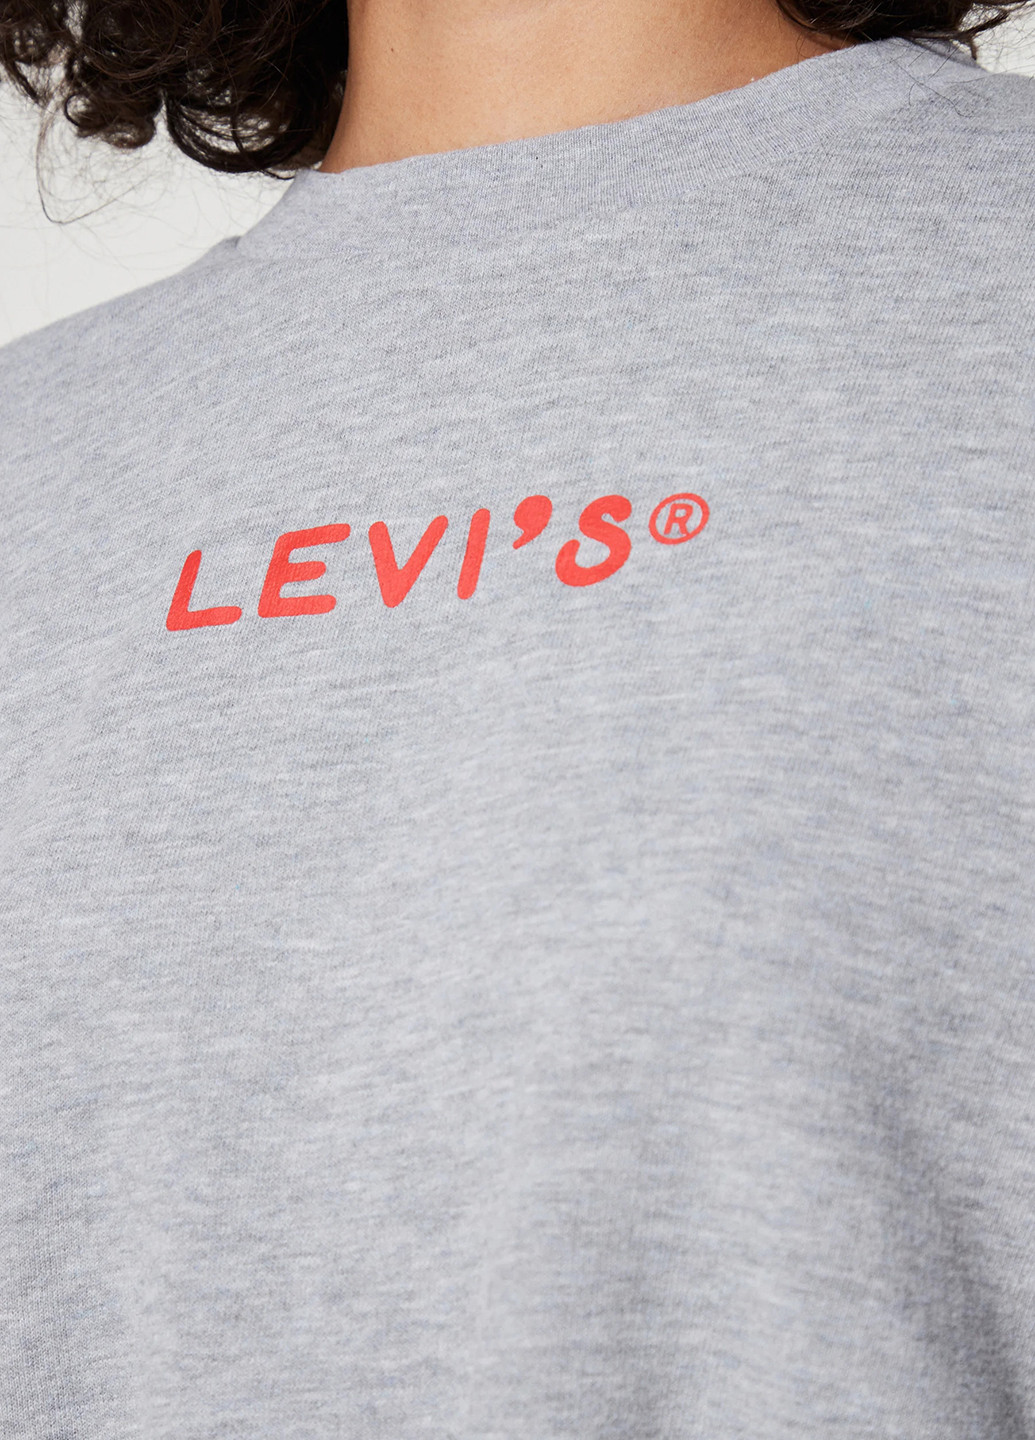 Свитшот Levi's - Прямой крой логотип серый кэжуал хлопок - (258245187)